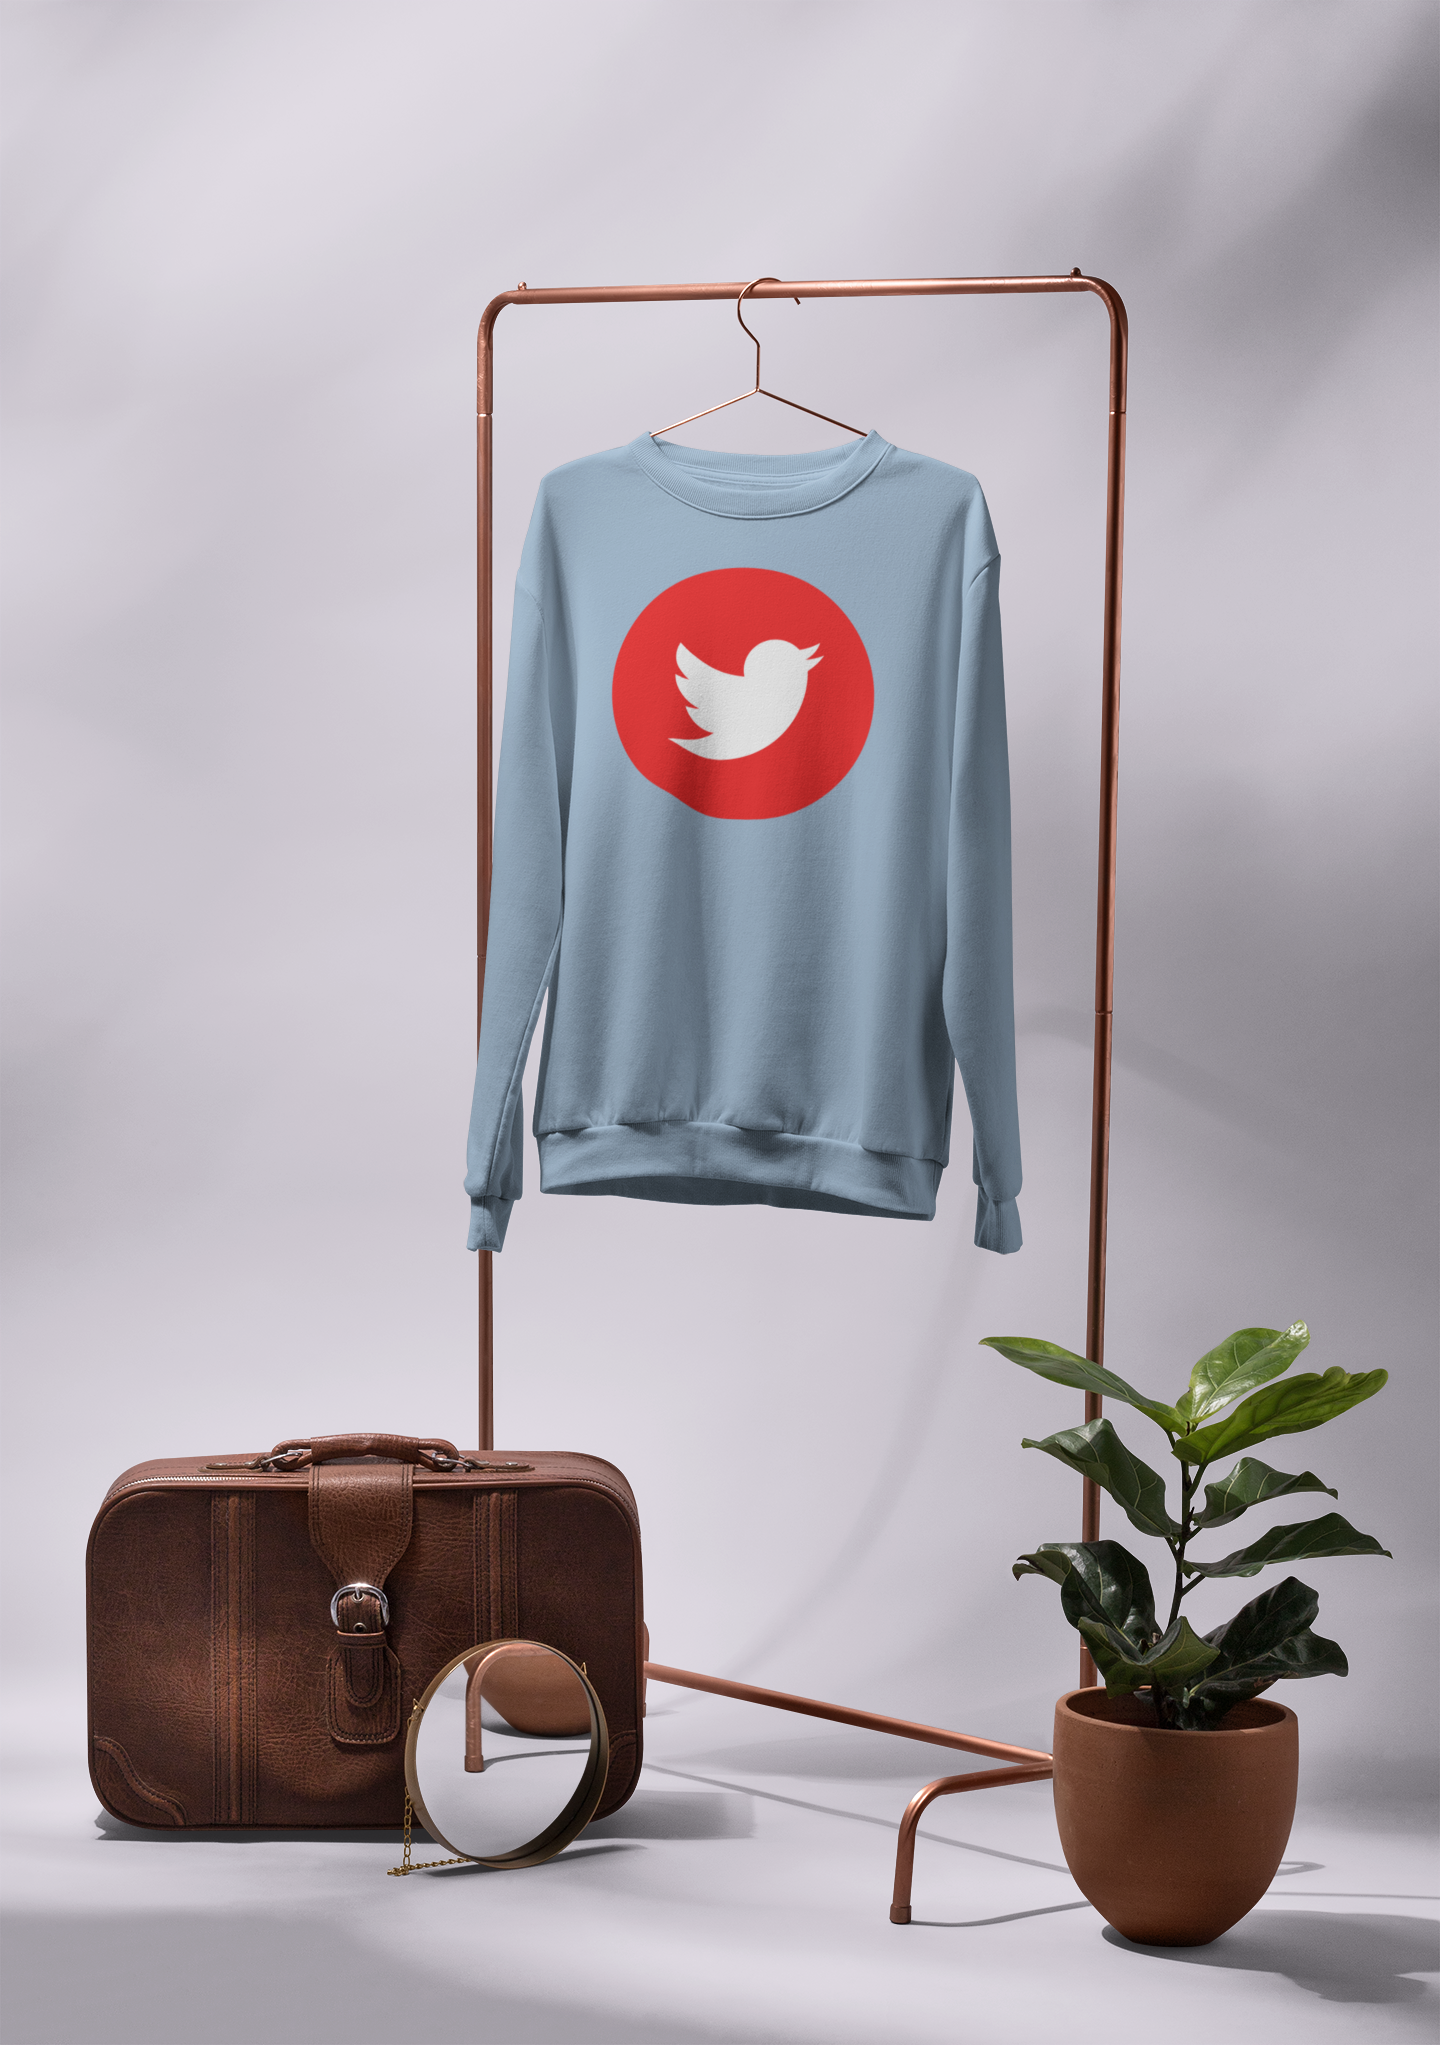 Twitter Red/White Sweatshirt Unisex